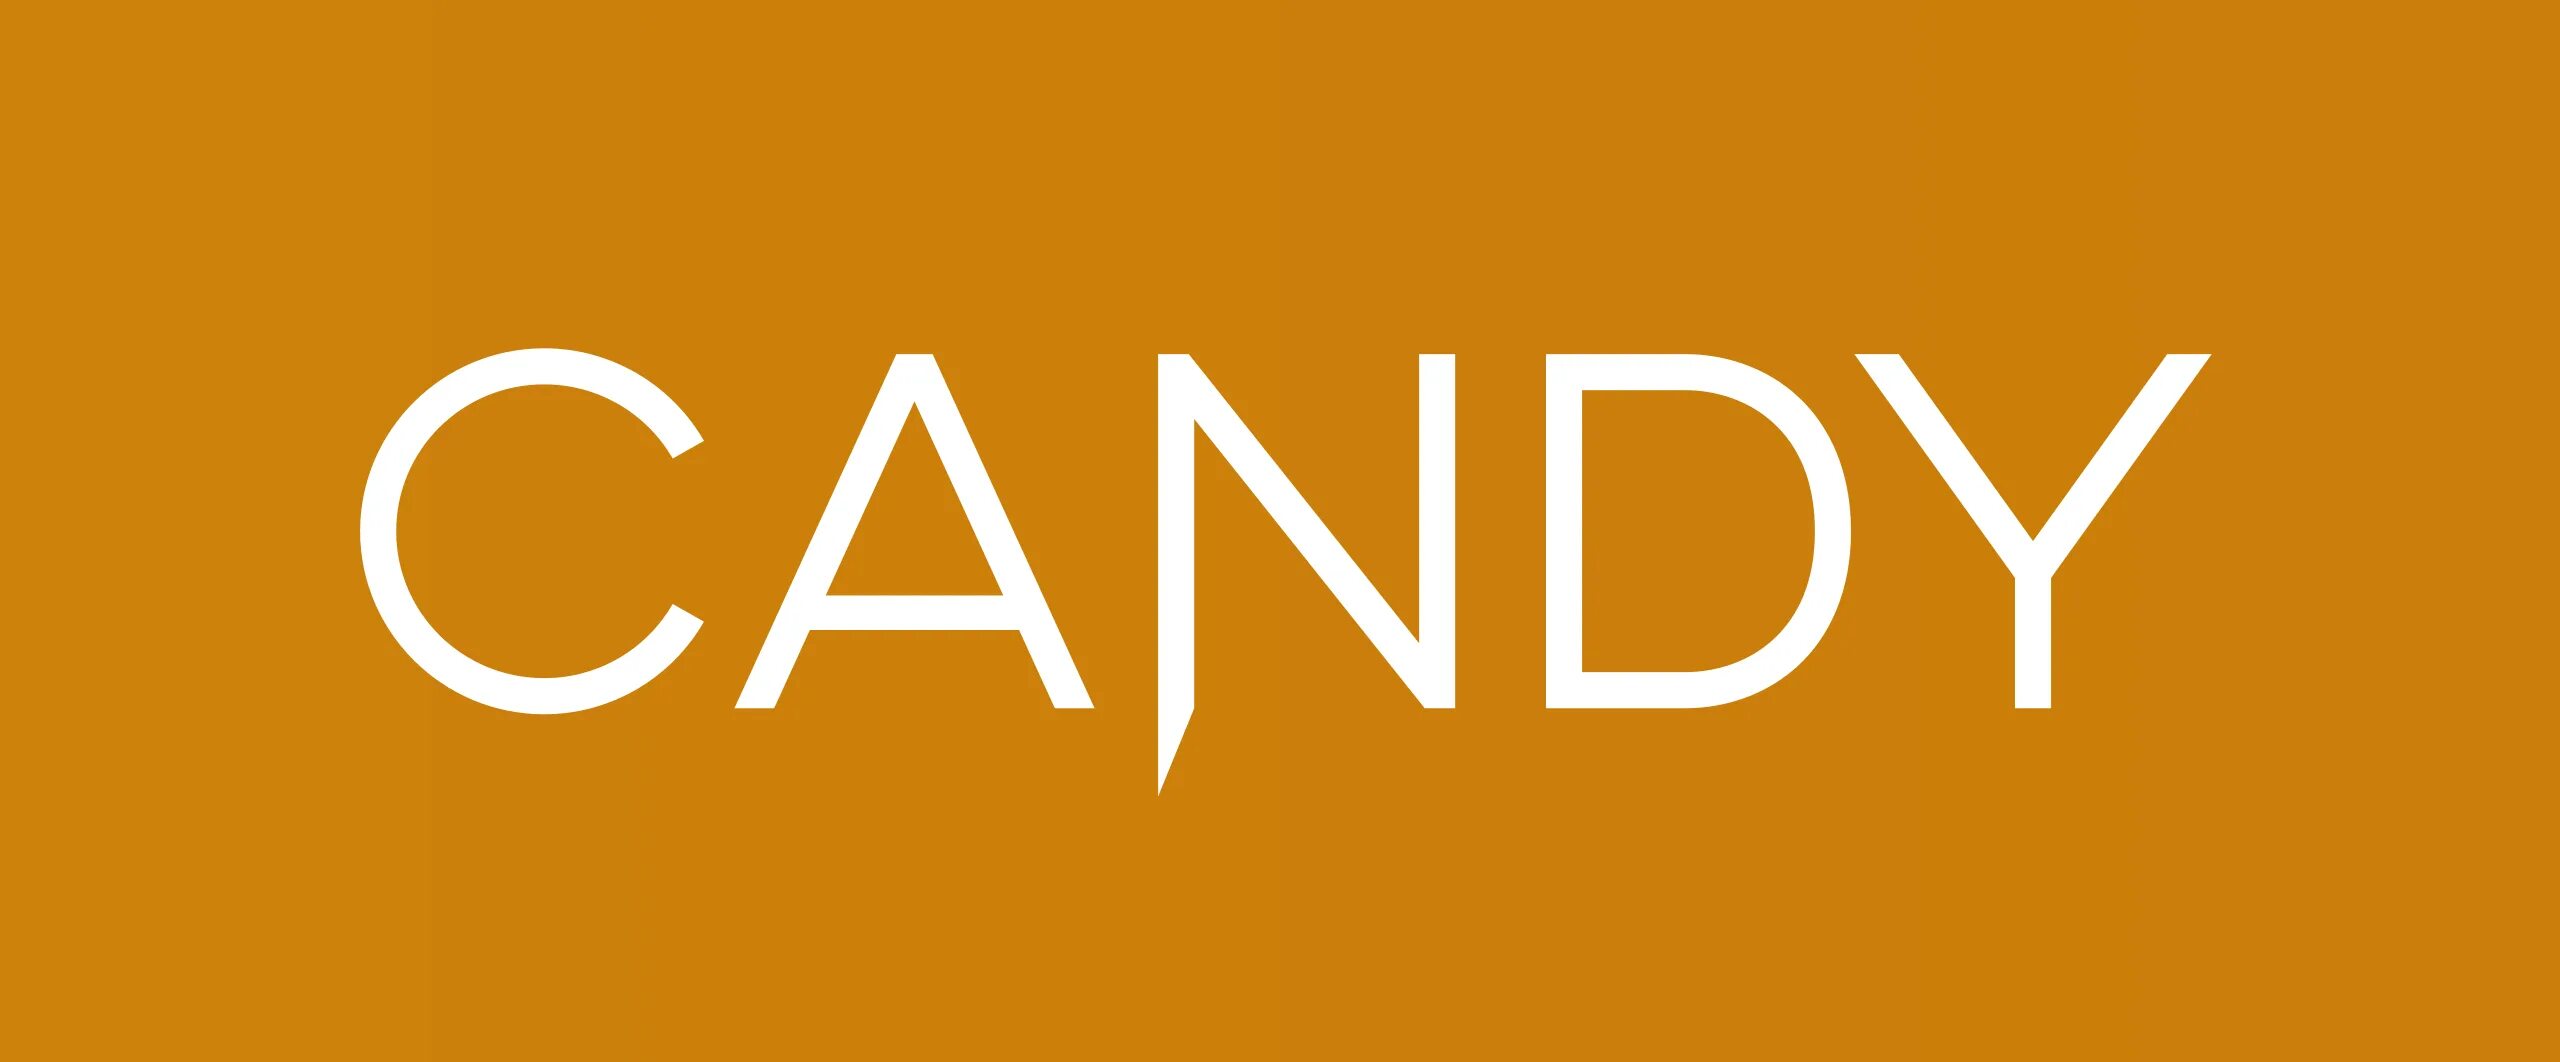 Телевизор candy tv. Candy logo. Кэнди ТВ. Mini Candy Wiki.